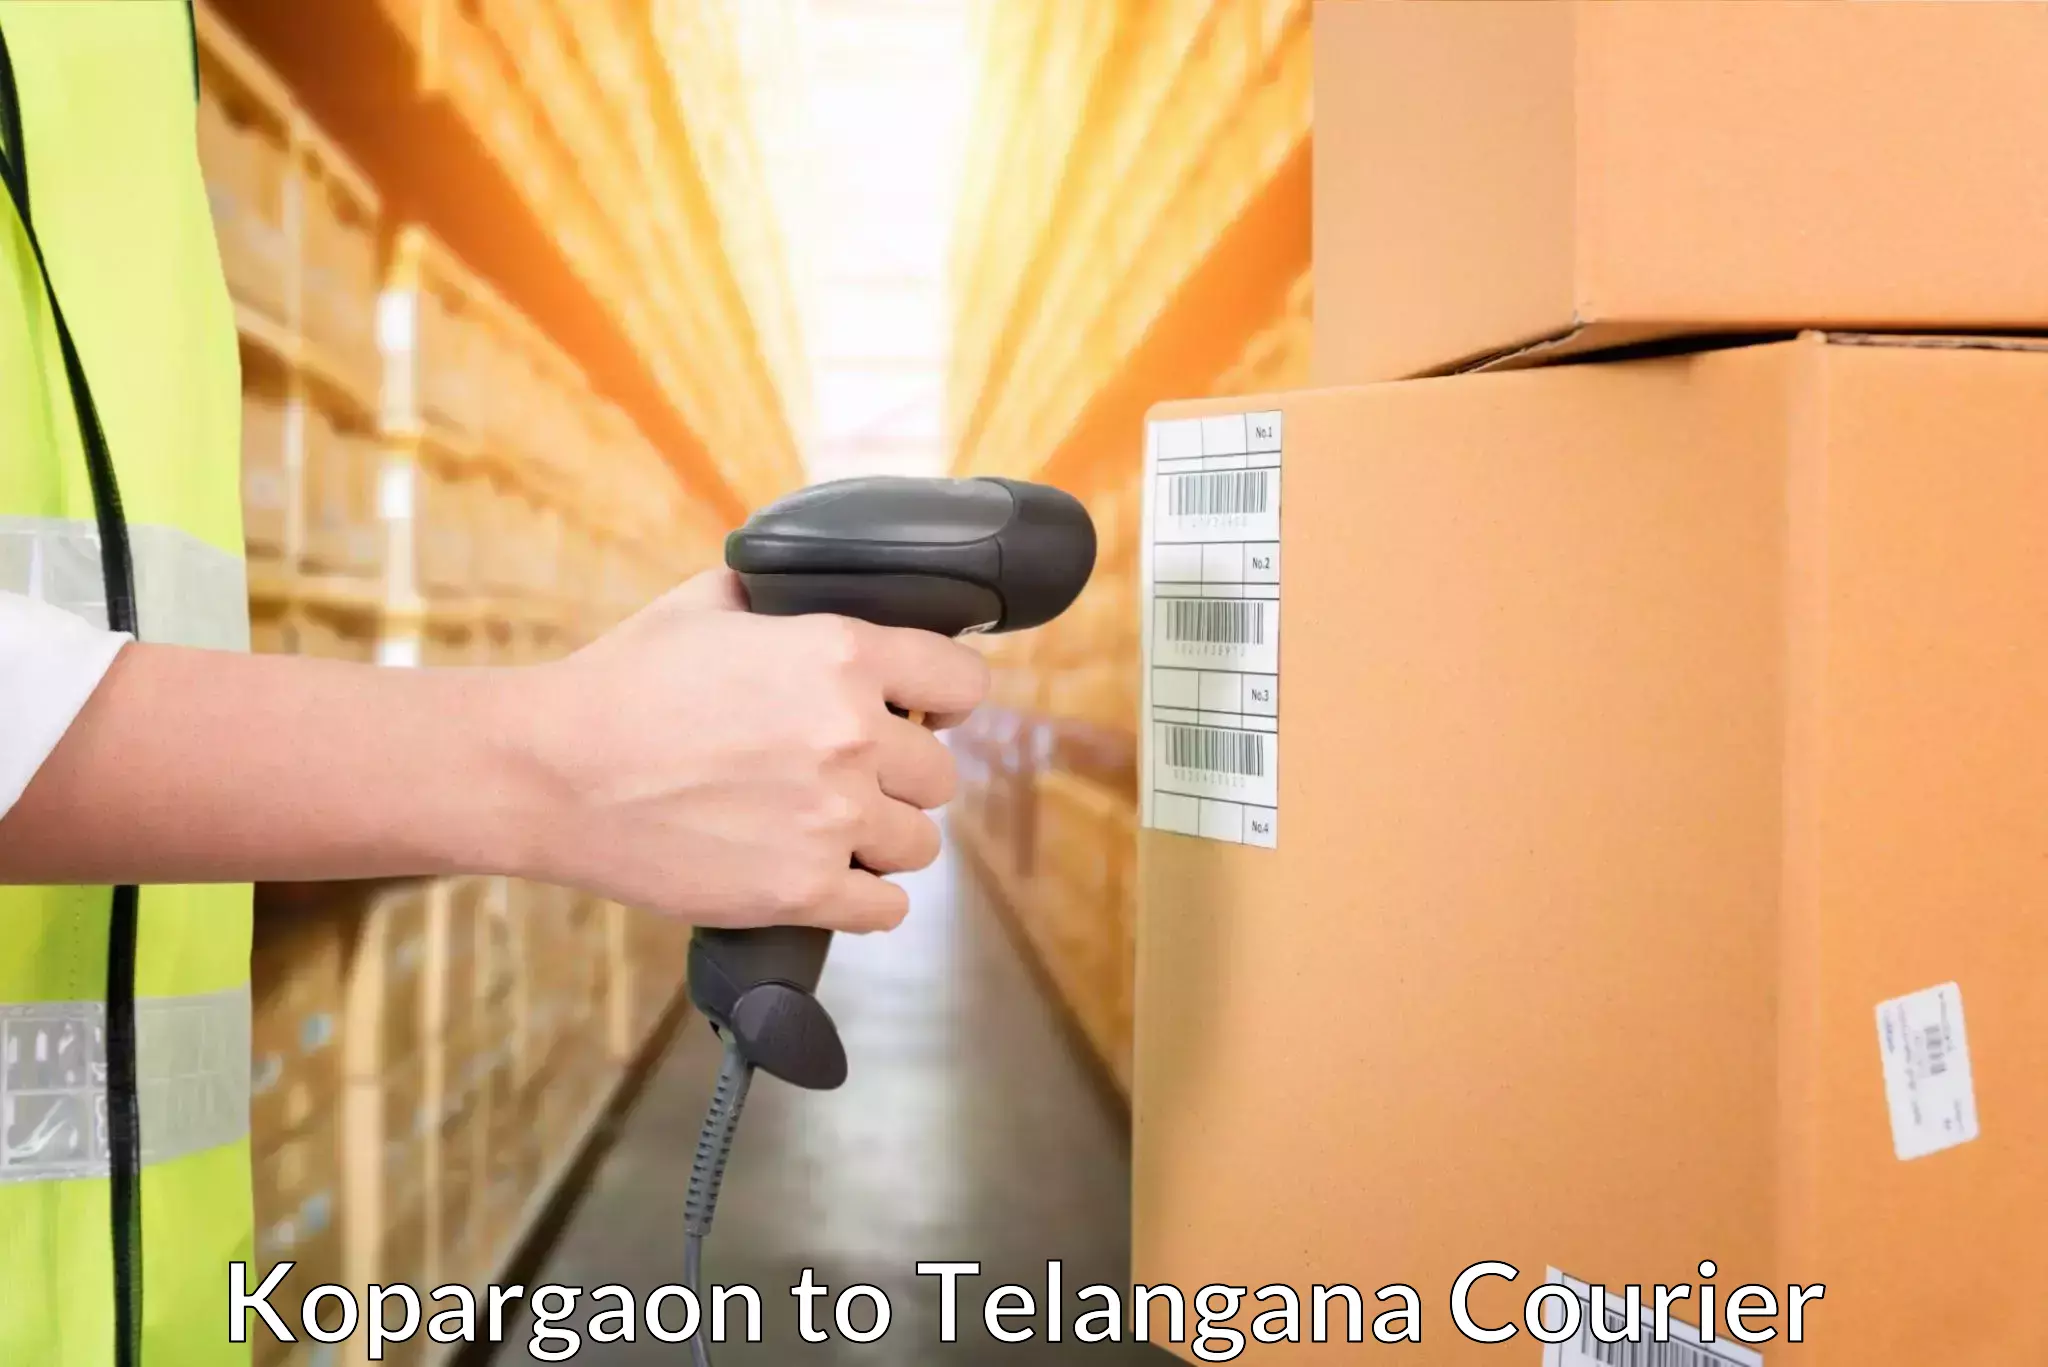 Quick parcel dispatch in Kopargaon to Tiryani